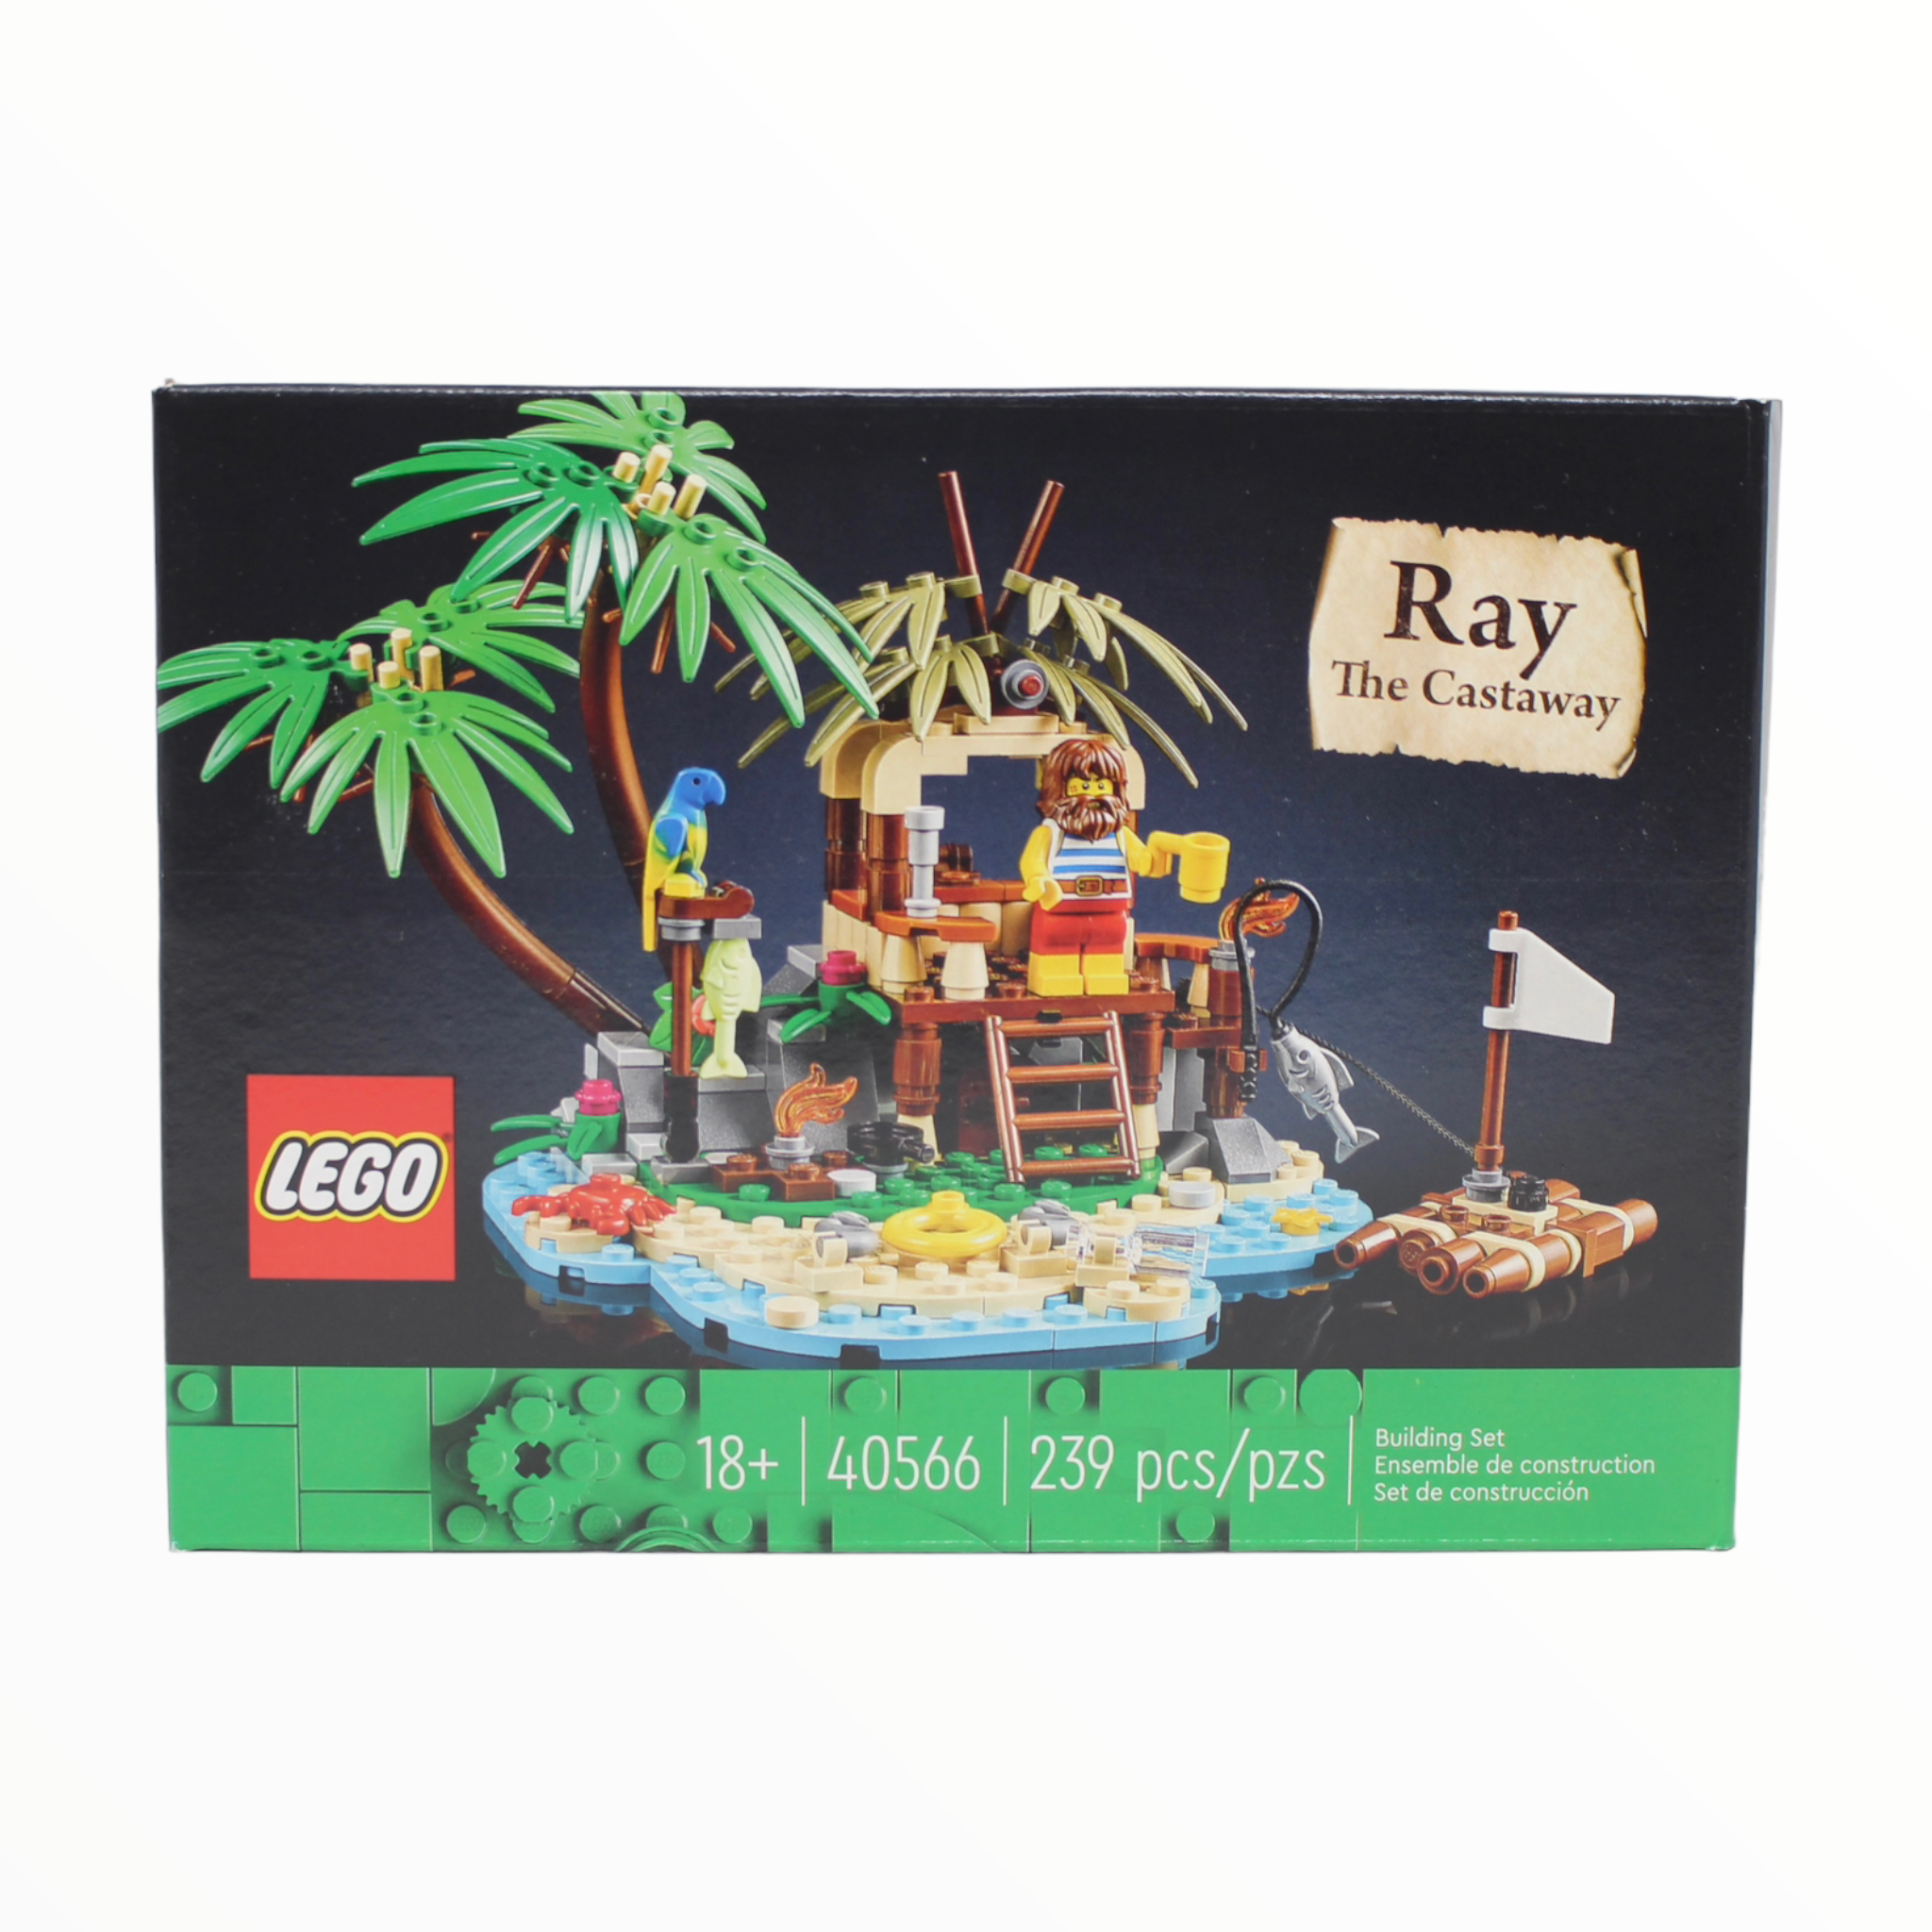 Retired Set 40566 LEGO Ideas Ray the Castaway